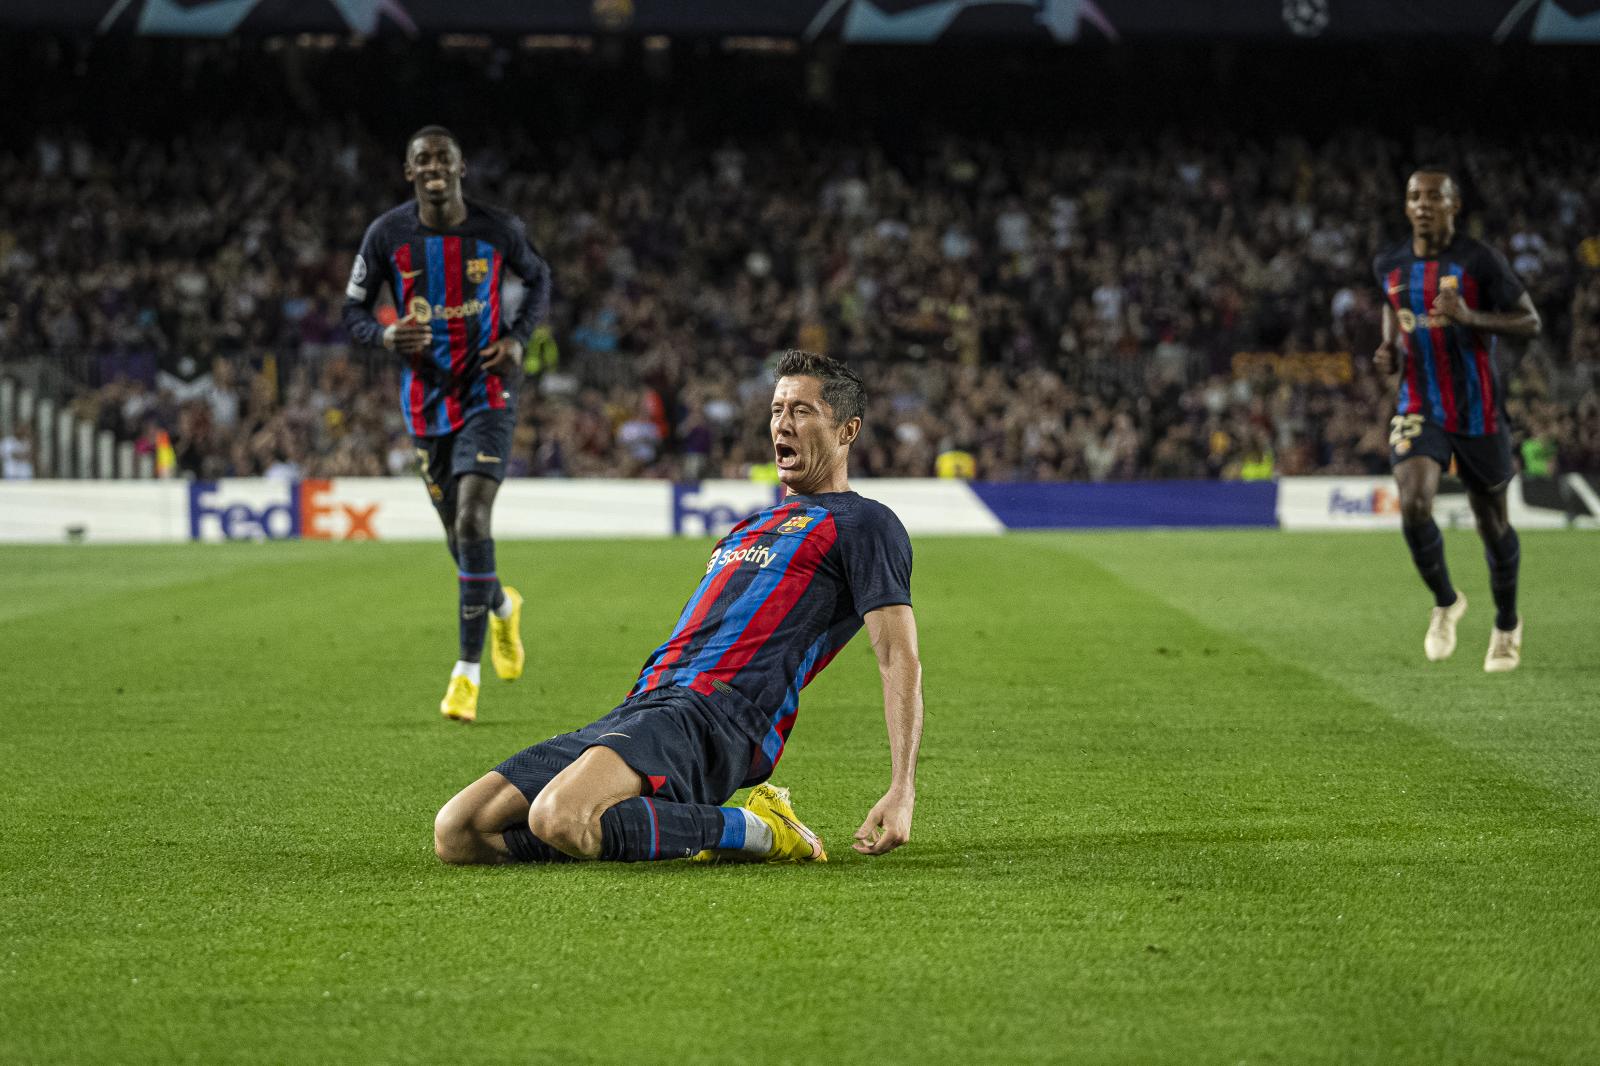 Image from DAILY NEWS - Robert Lewandowski (9) Futbol Club Barcelona player...